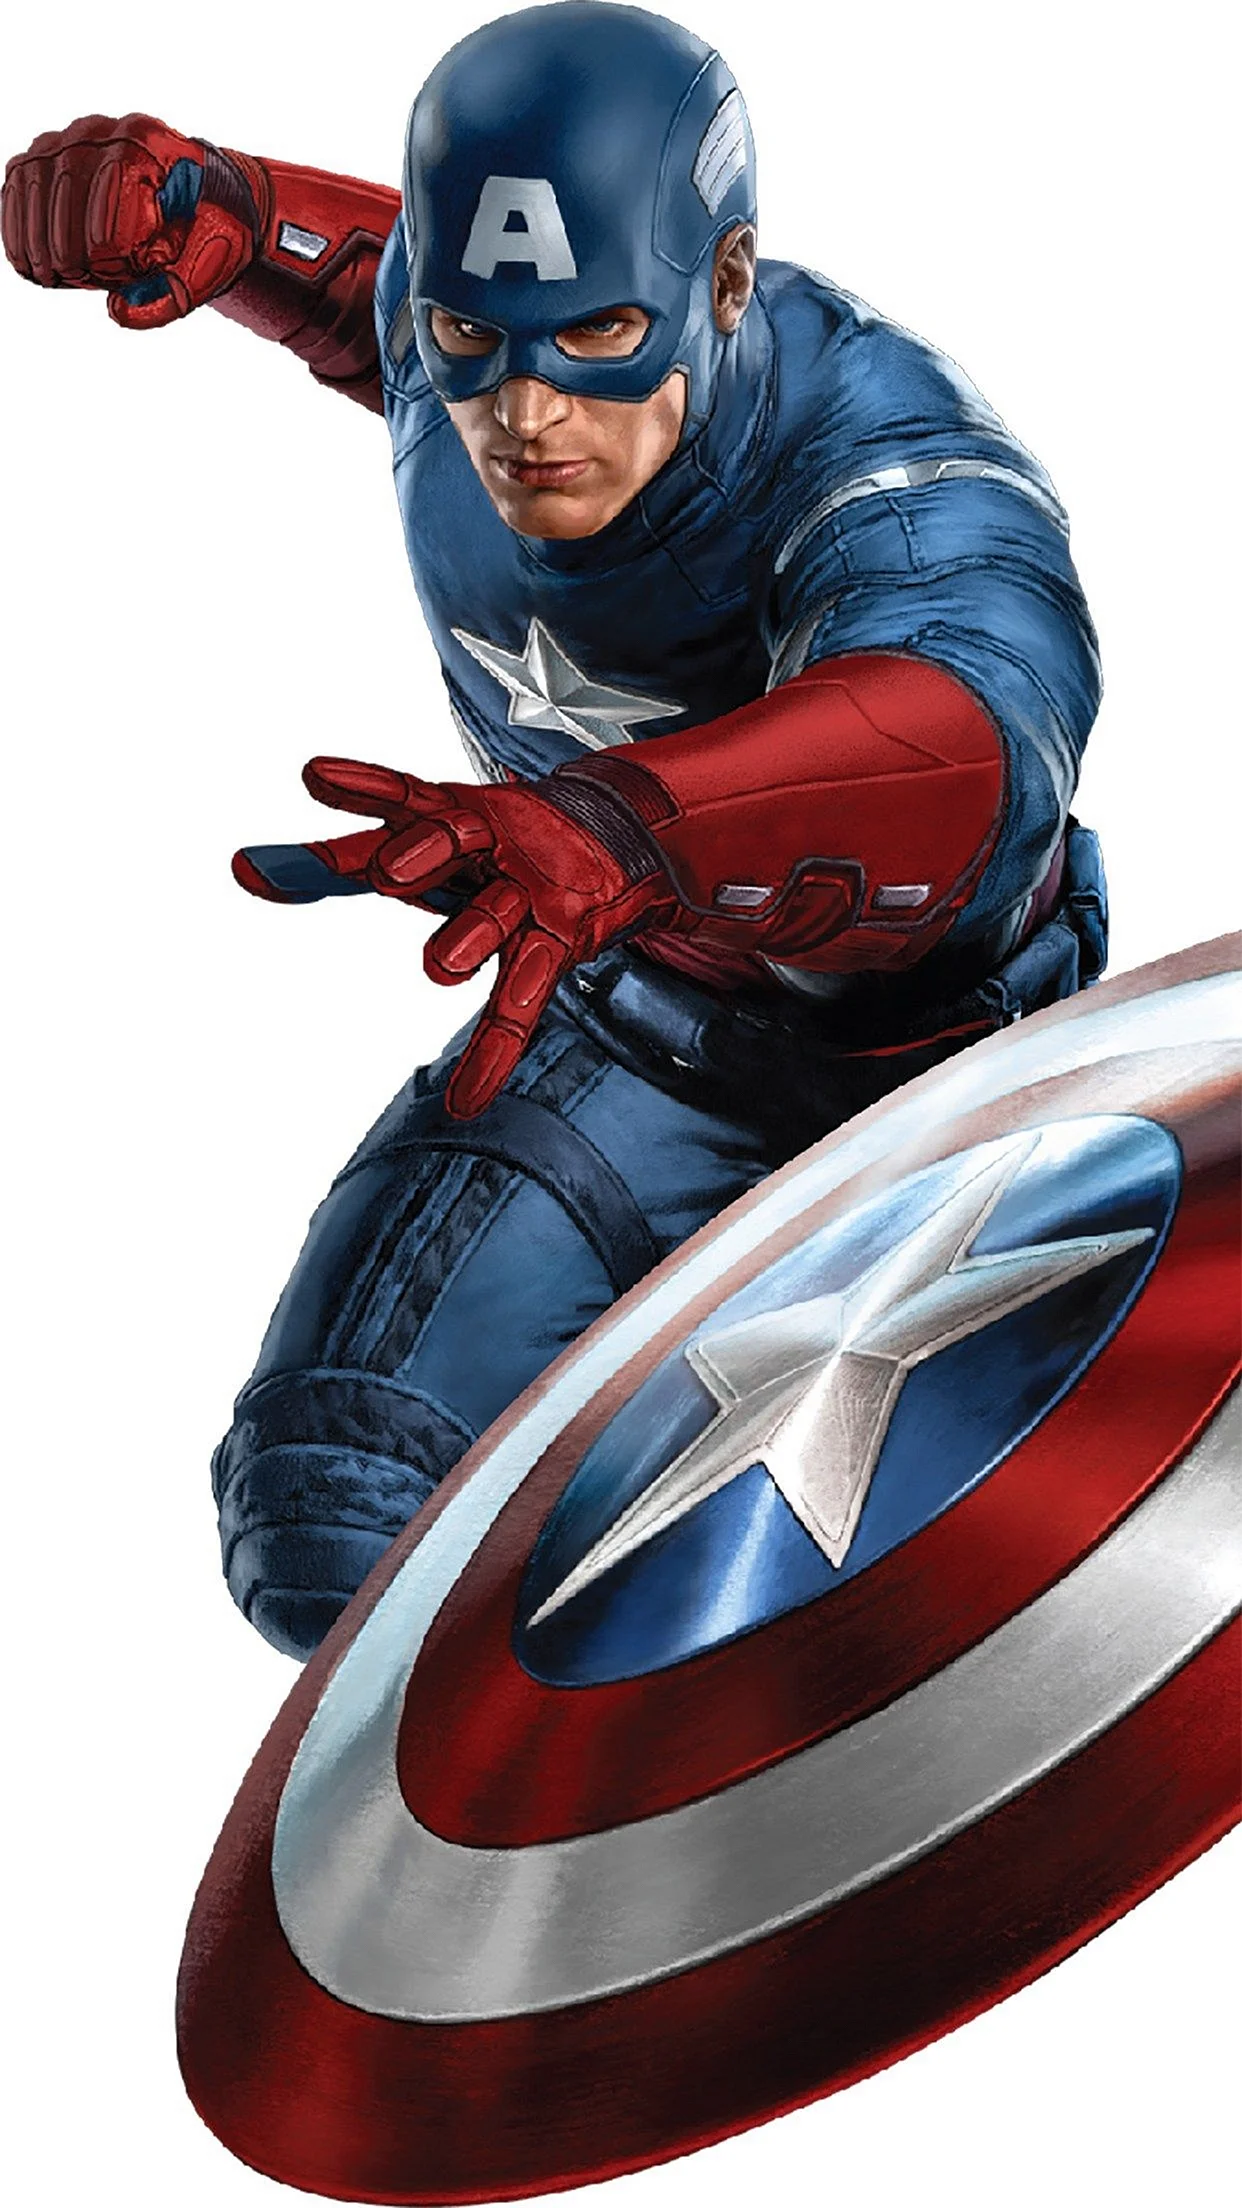 Marvel Captain America Wallpaper For iPhone